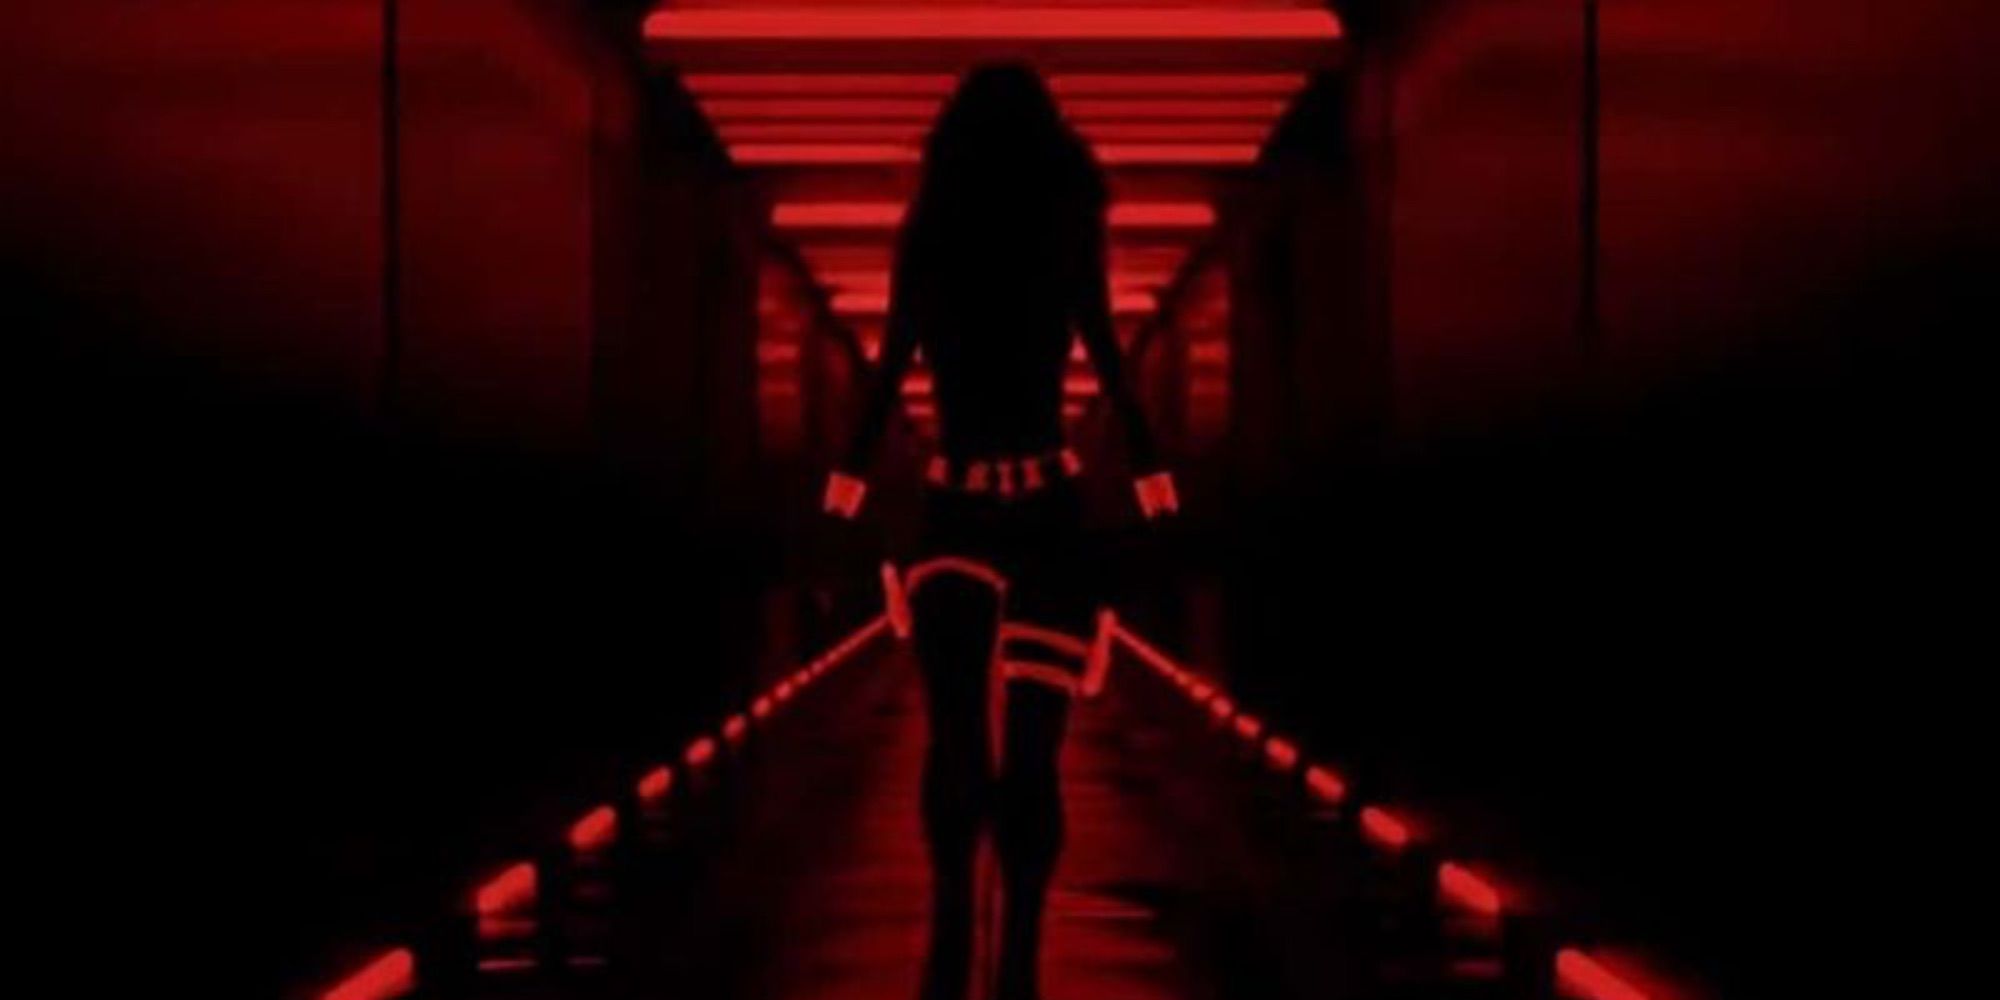 Natasha Romanoff (Black Widow) walks through the Red Room 